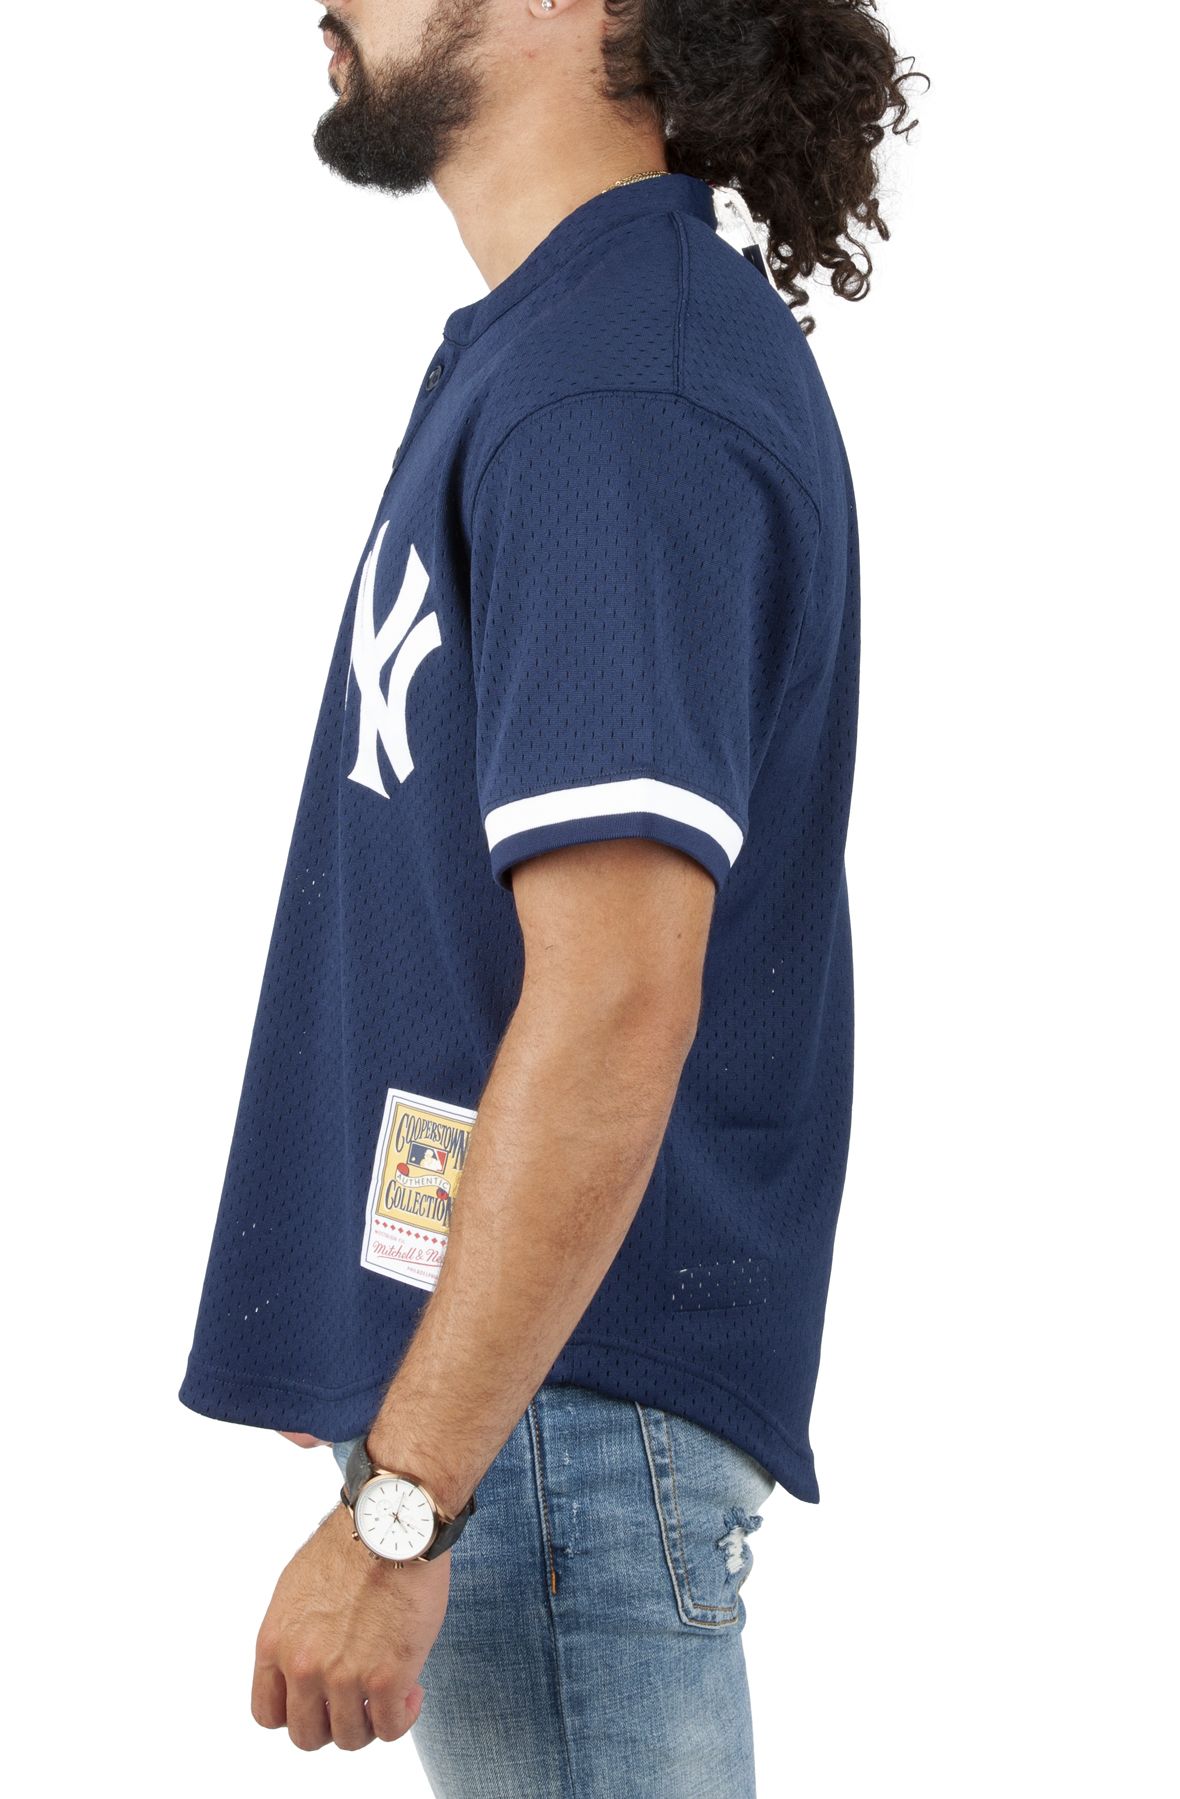 Mitchell & Ness New York Yankees 2009 Derek Jeter Authentic Pullover BP Jersey Navy